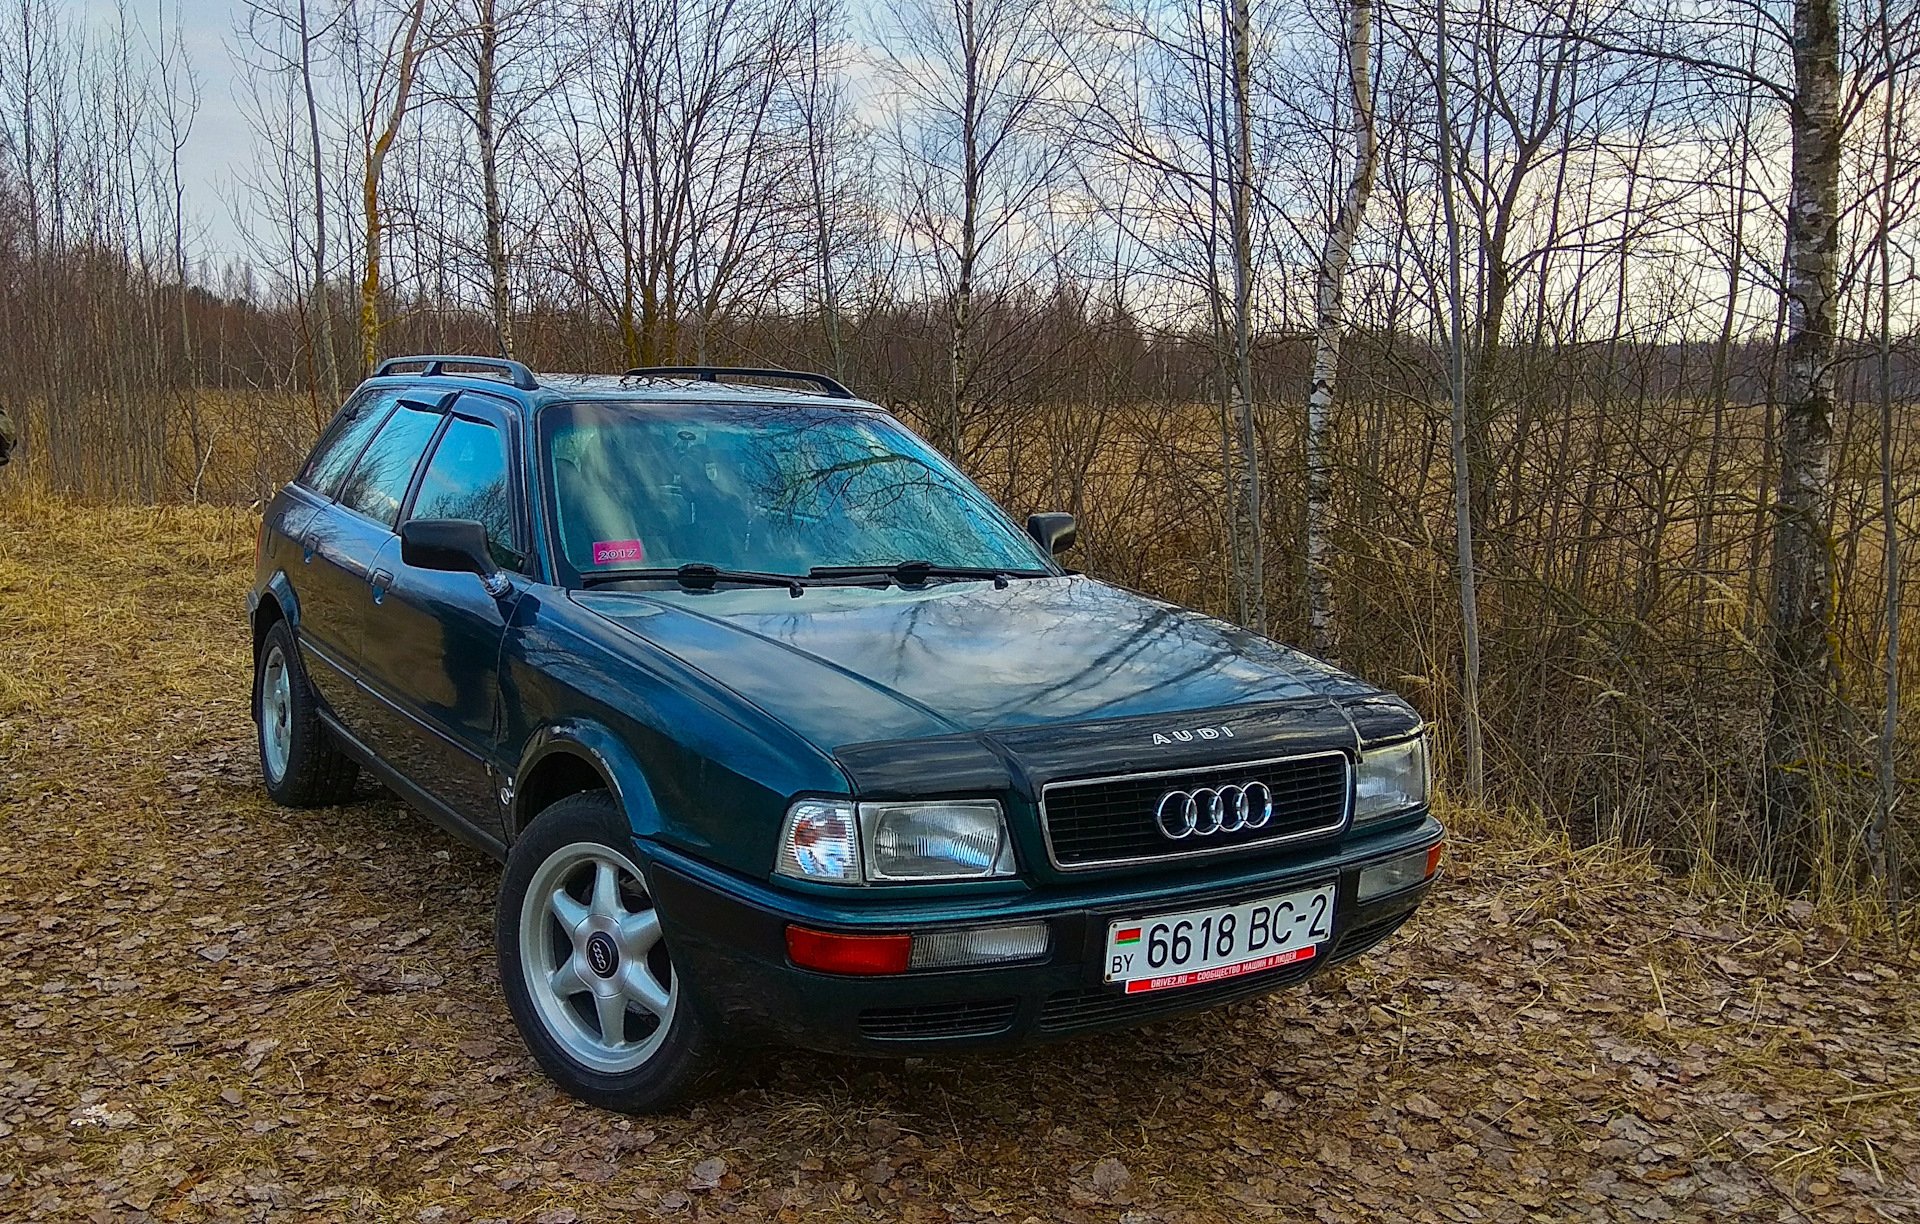 Купить ауди б4 в белоруссии. Audi 80 b4. Audi 80 b4 Sport Edition. Ауди 80 в4. Ауди 80 б4.